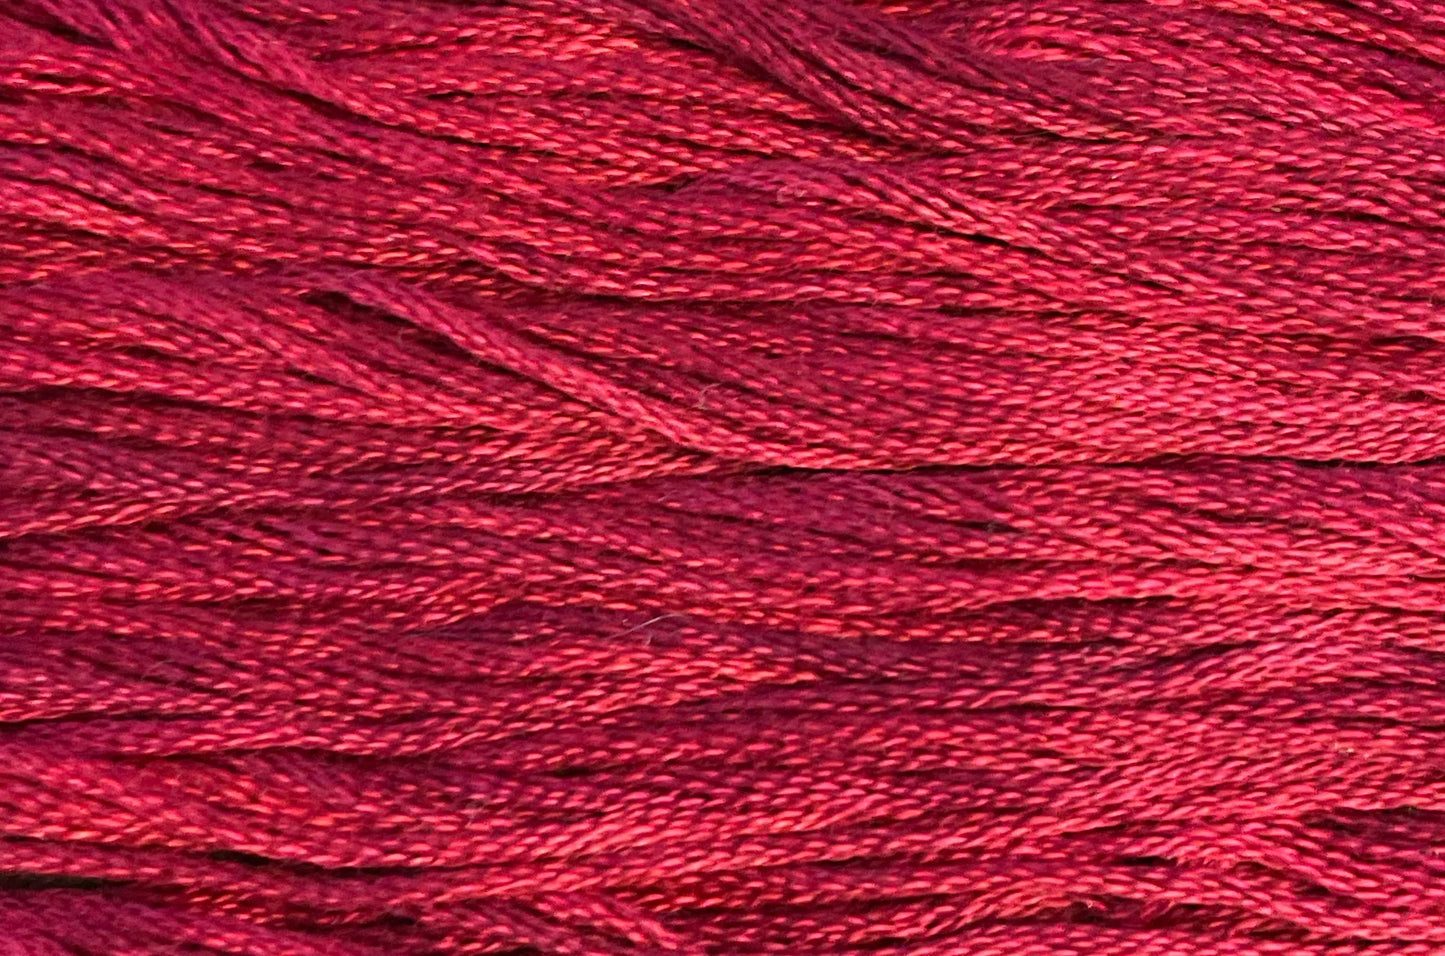 Schoolhouse Red - Gentle Arts Cotton Thread - 5 yard Skein - Cross Stitch Floss, Thread & Floss, Thread & Floss, The Crafty Grimalkin - A Cross Stitch Store